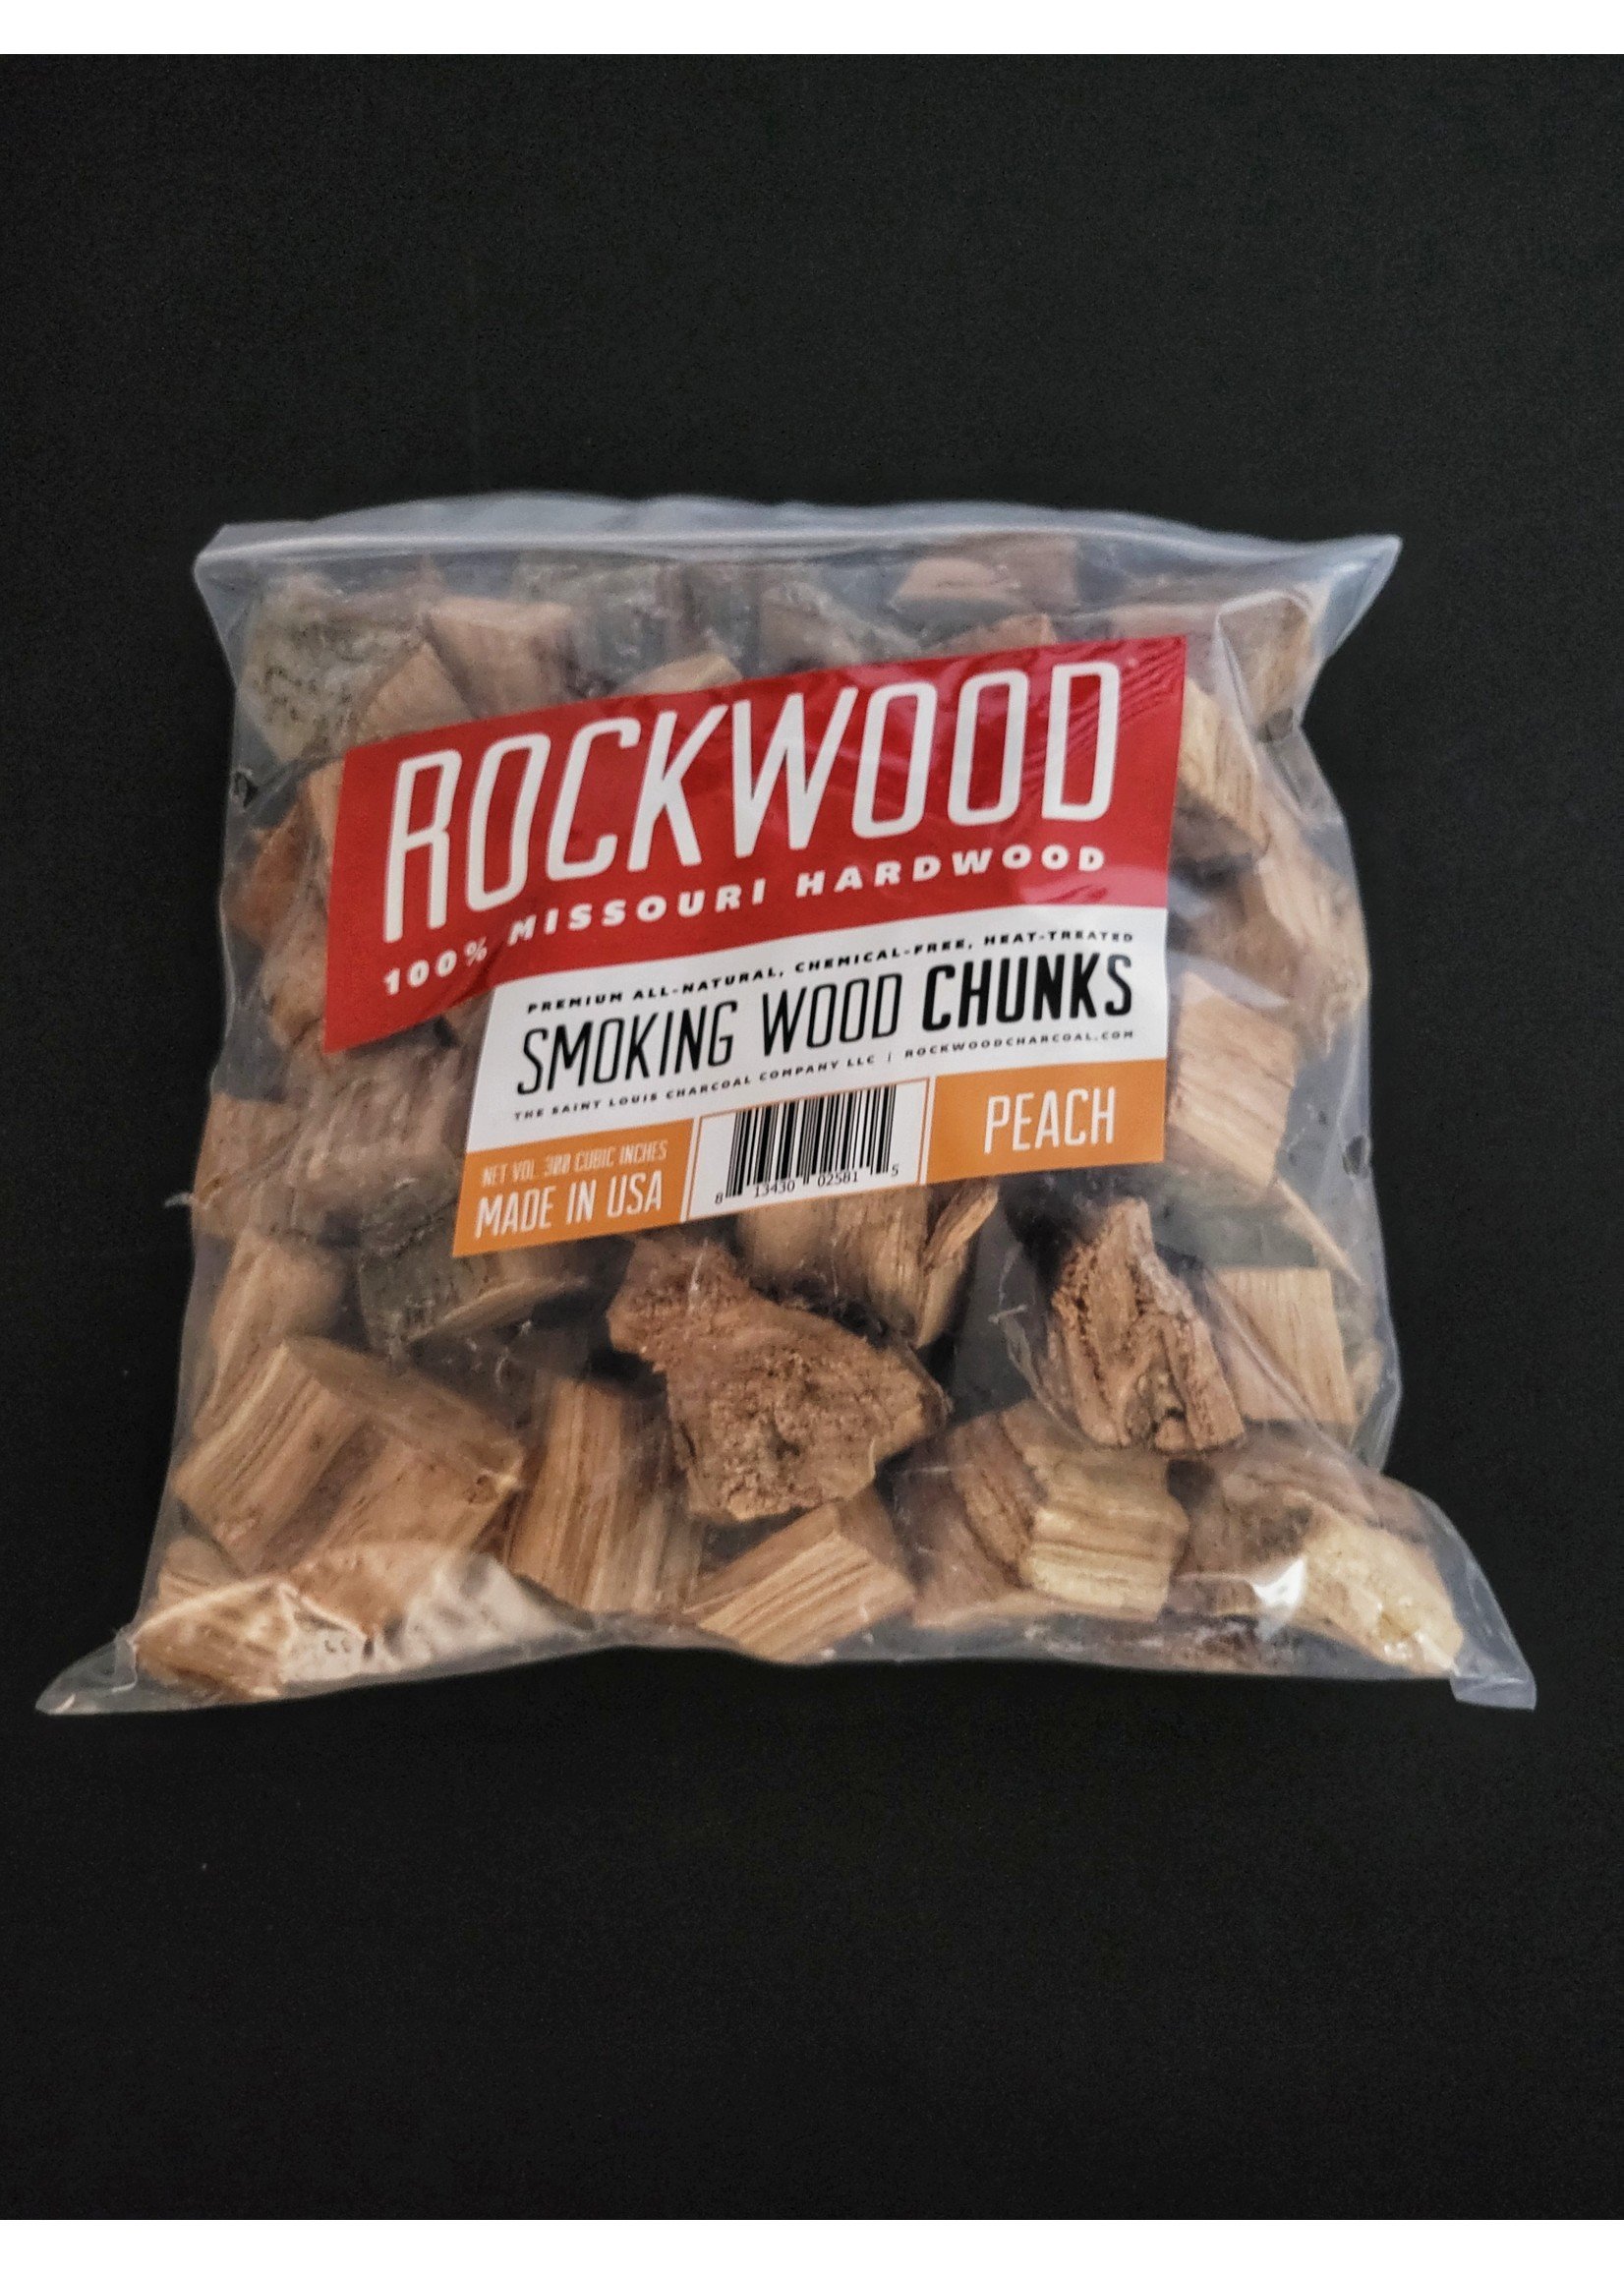 St. Louis Charcoal Rockwood Smoking Chunks